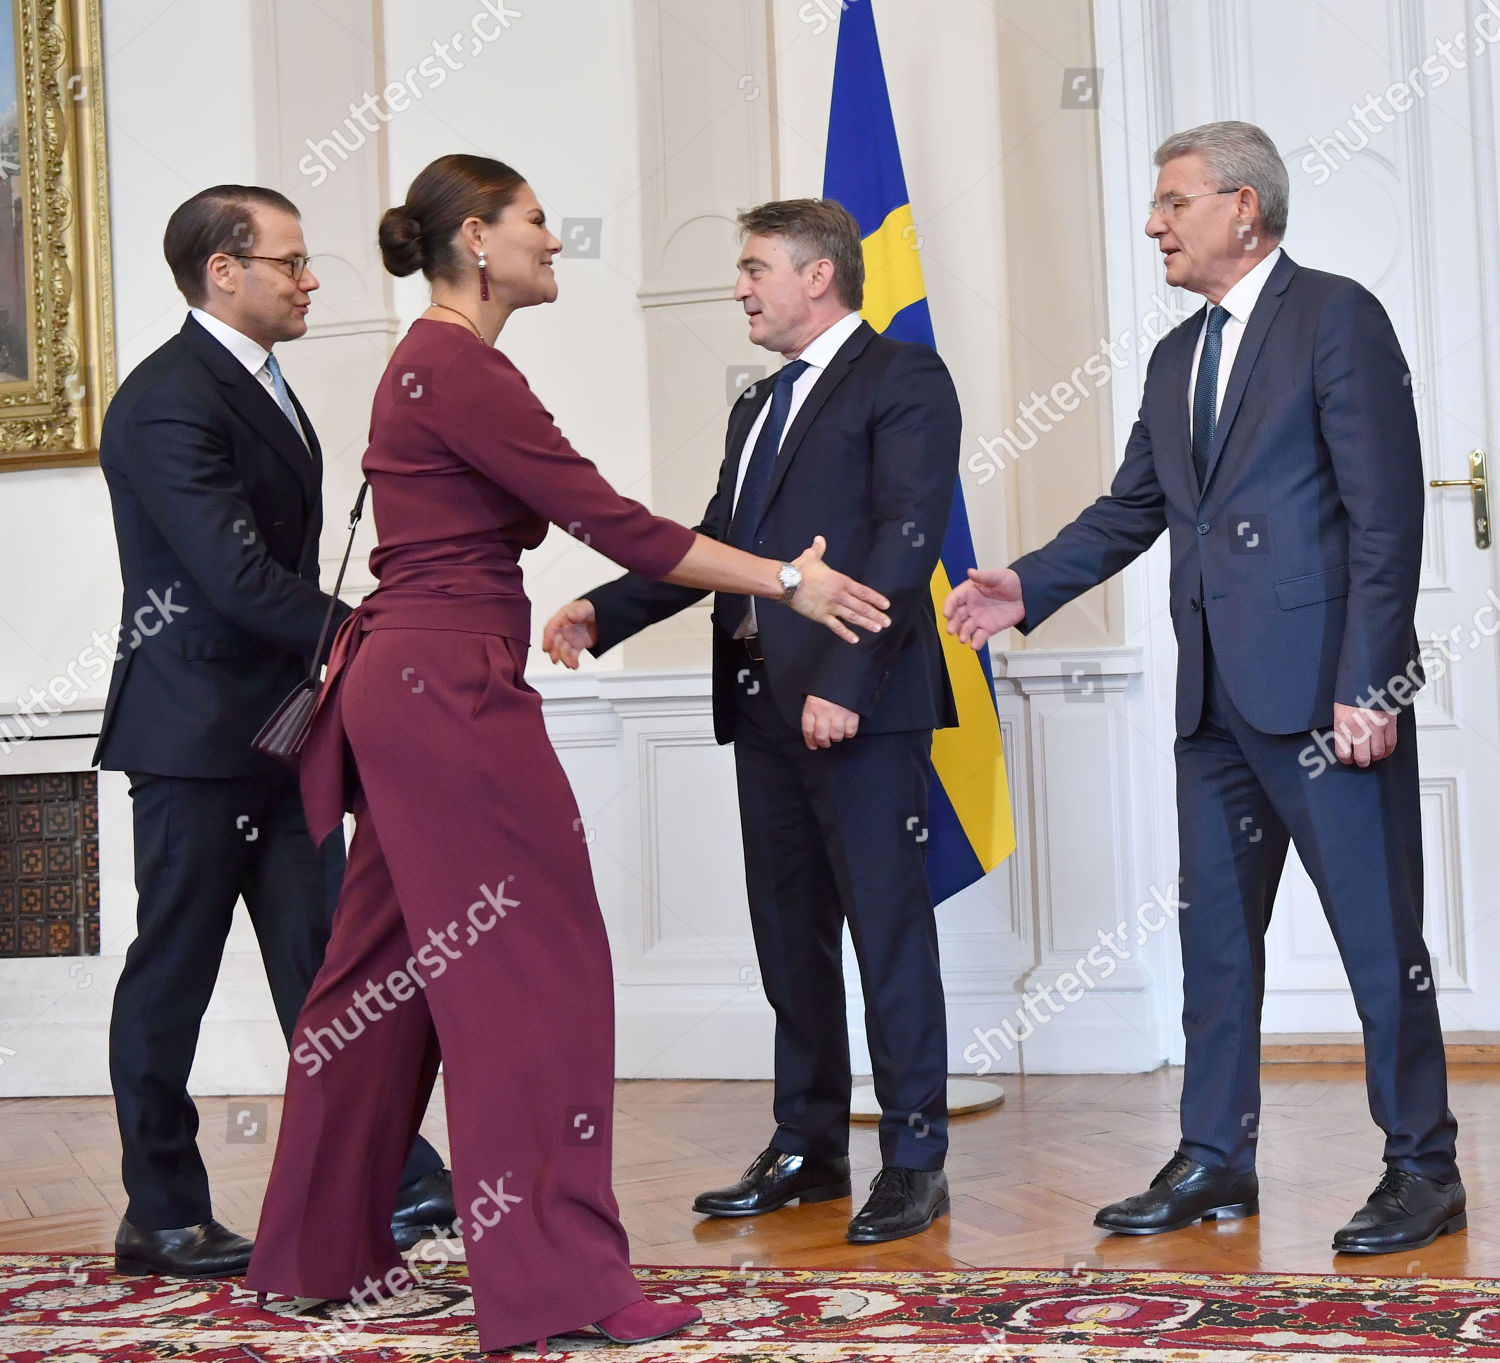 swedish-royals-visit-to-bosnia-herzegovina-shutterstock-editorial-10467349c.jpg